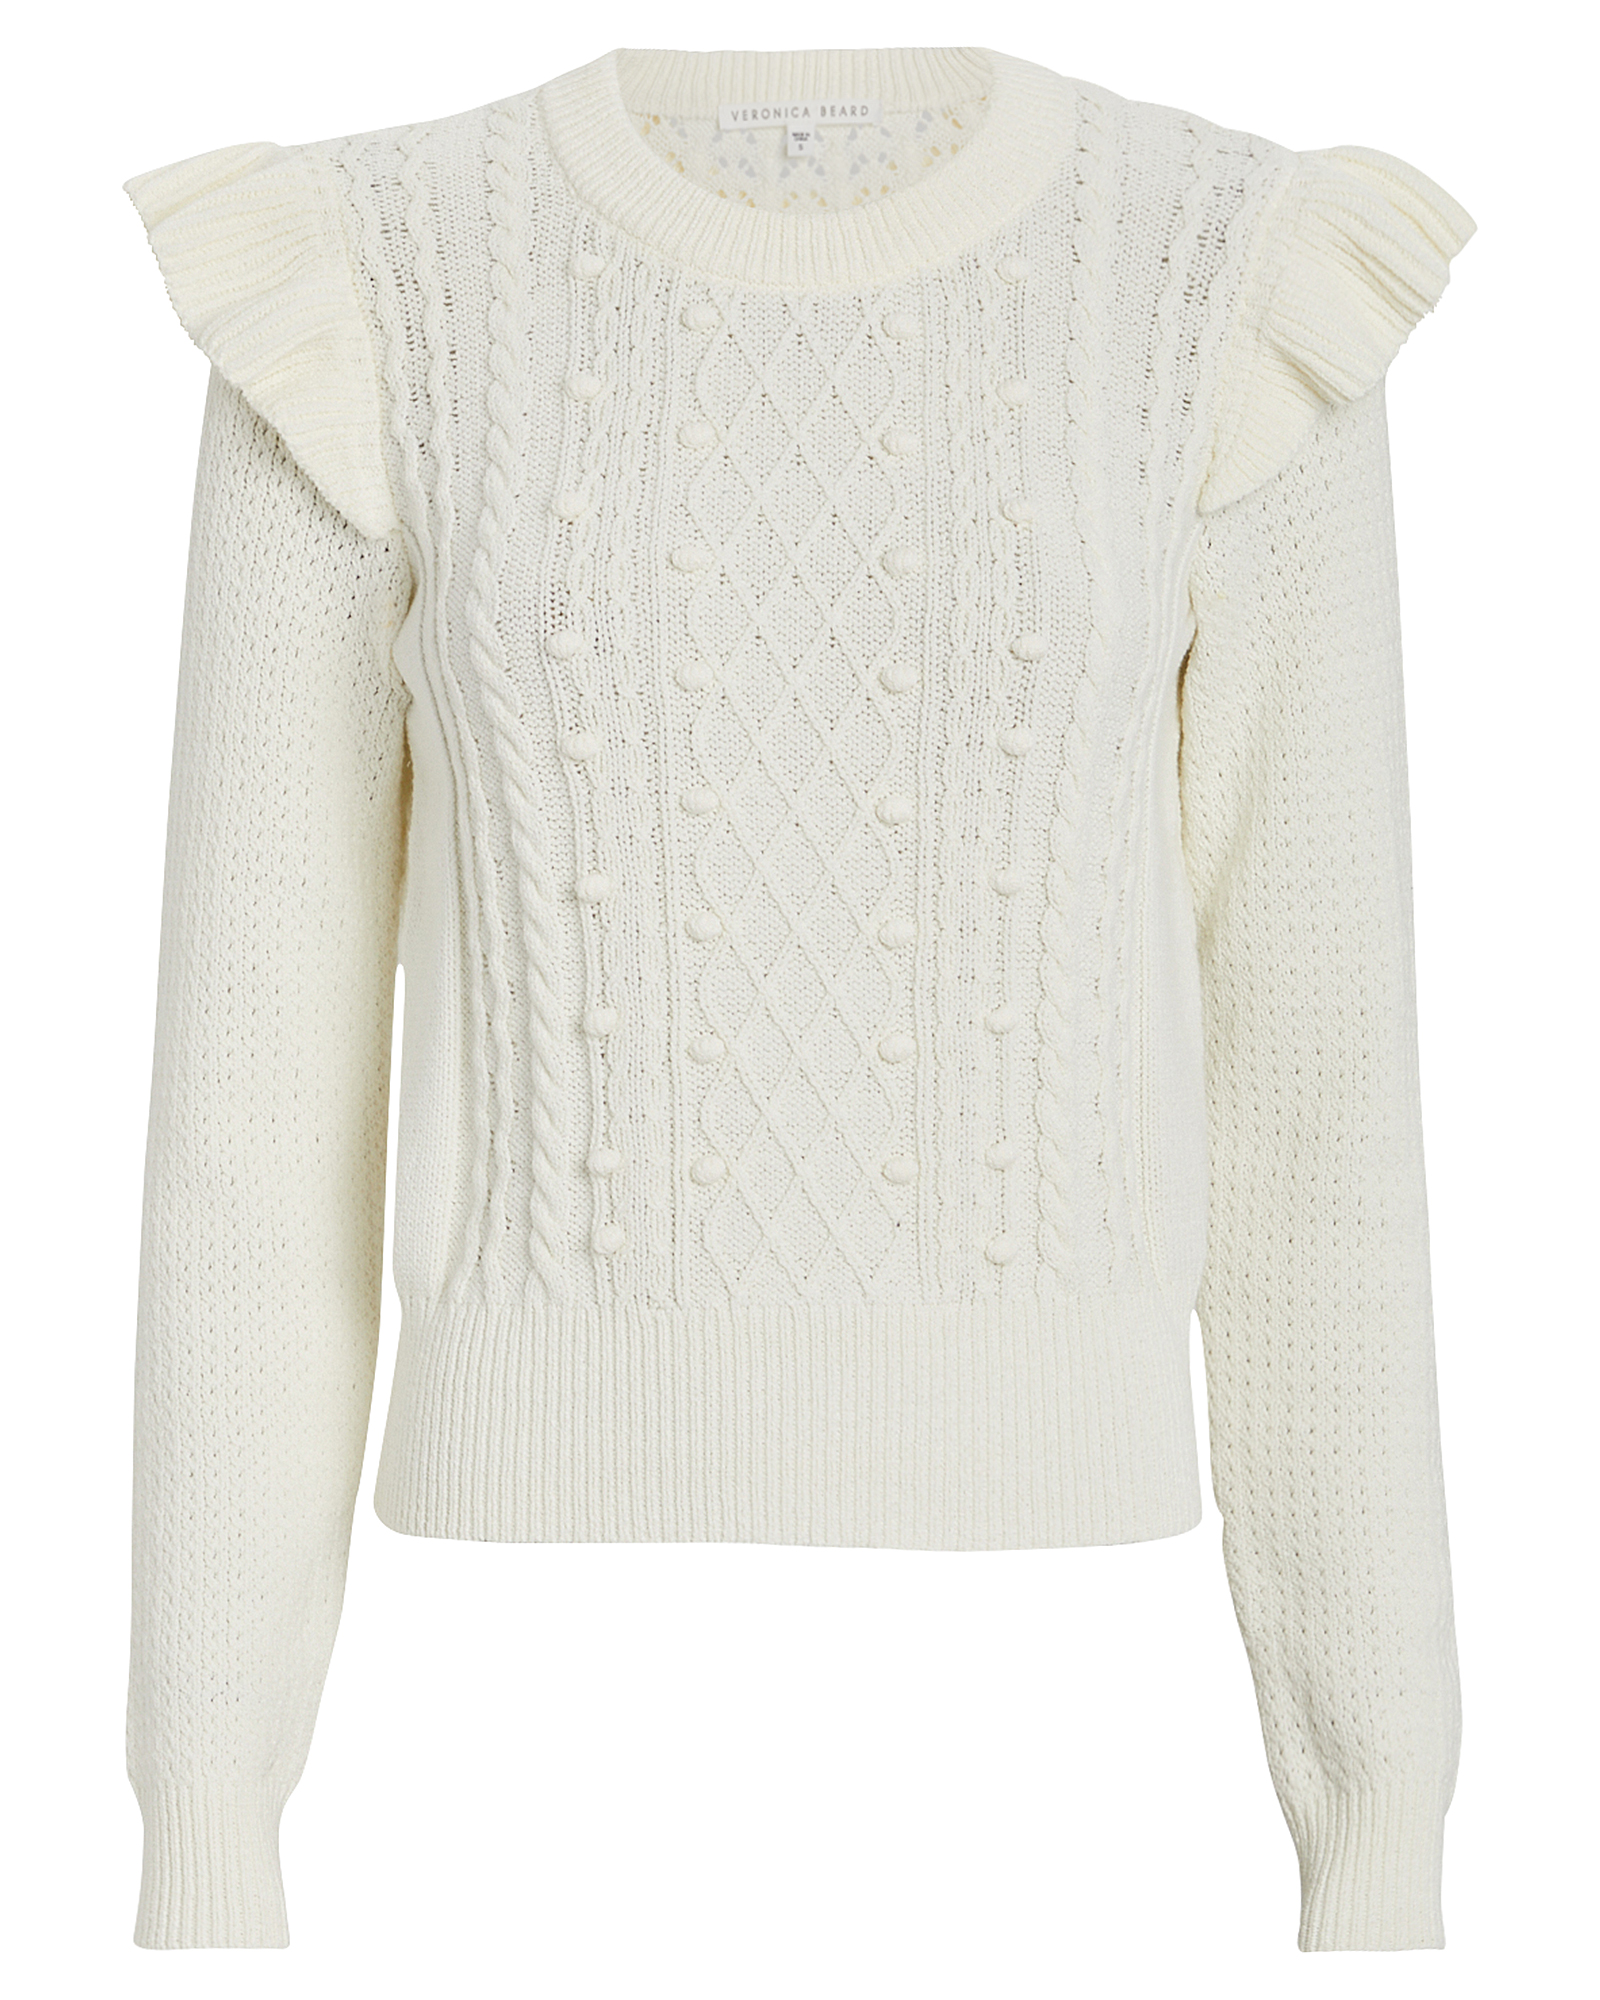 Veronica Beard | Earl Ruffled Cable Knit Sweater | INTERMIX®